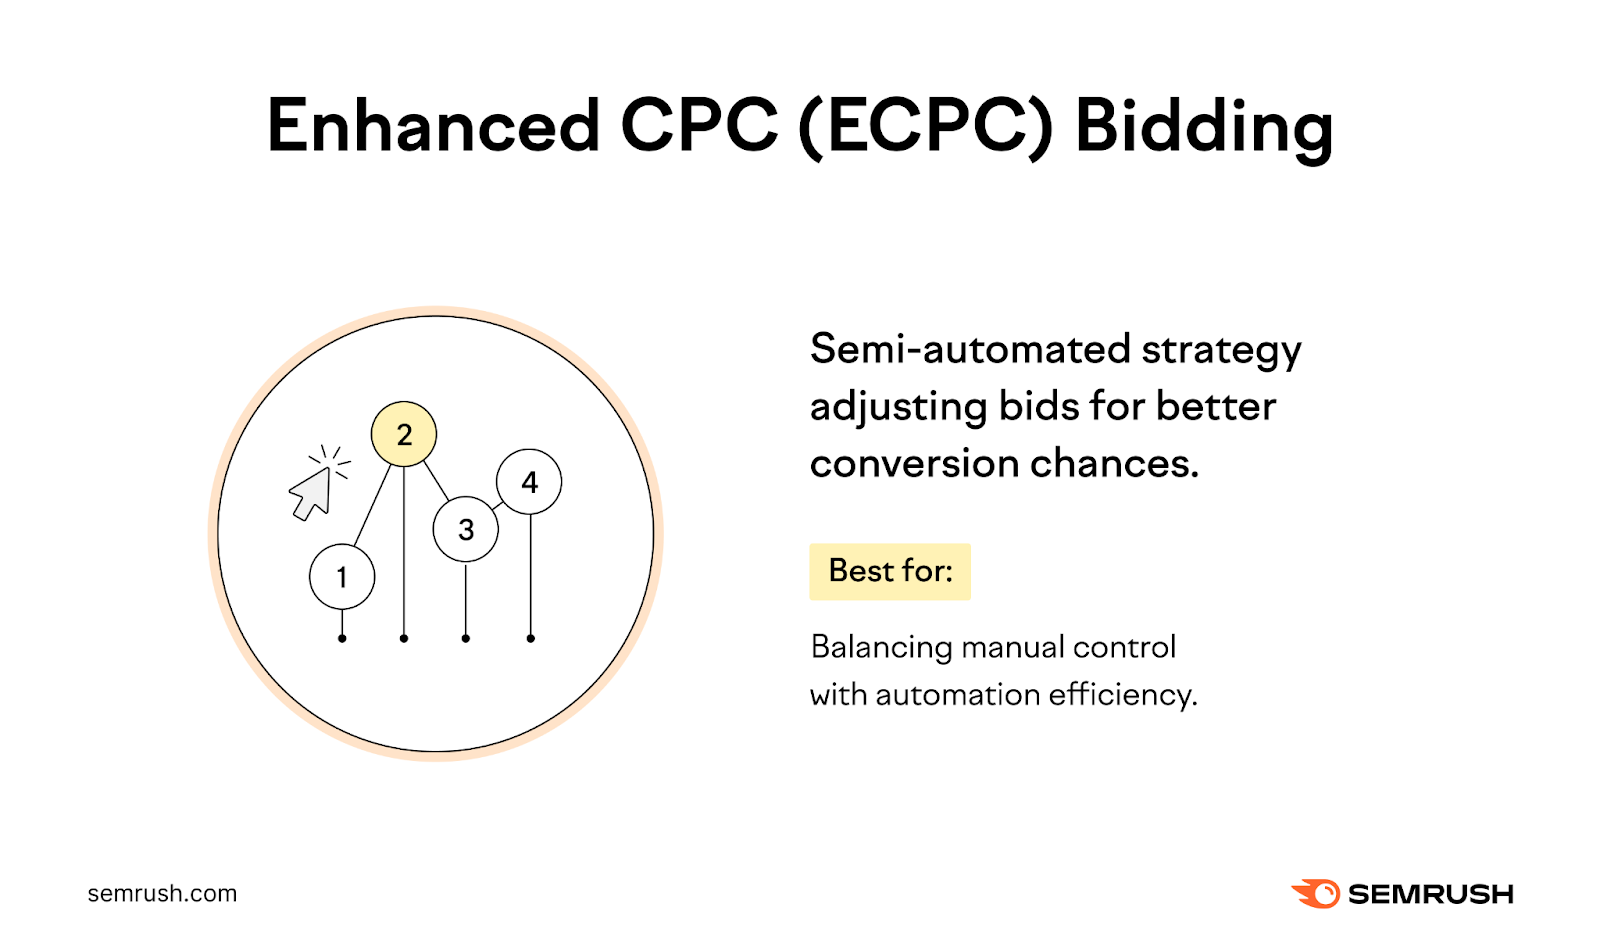 Enhanced CPC (ECPC) Bidding